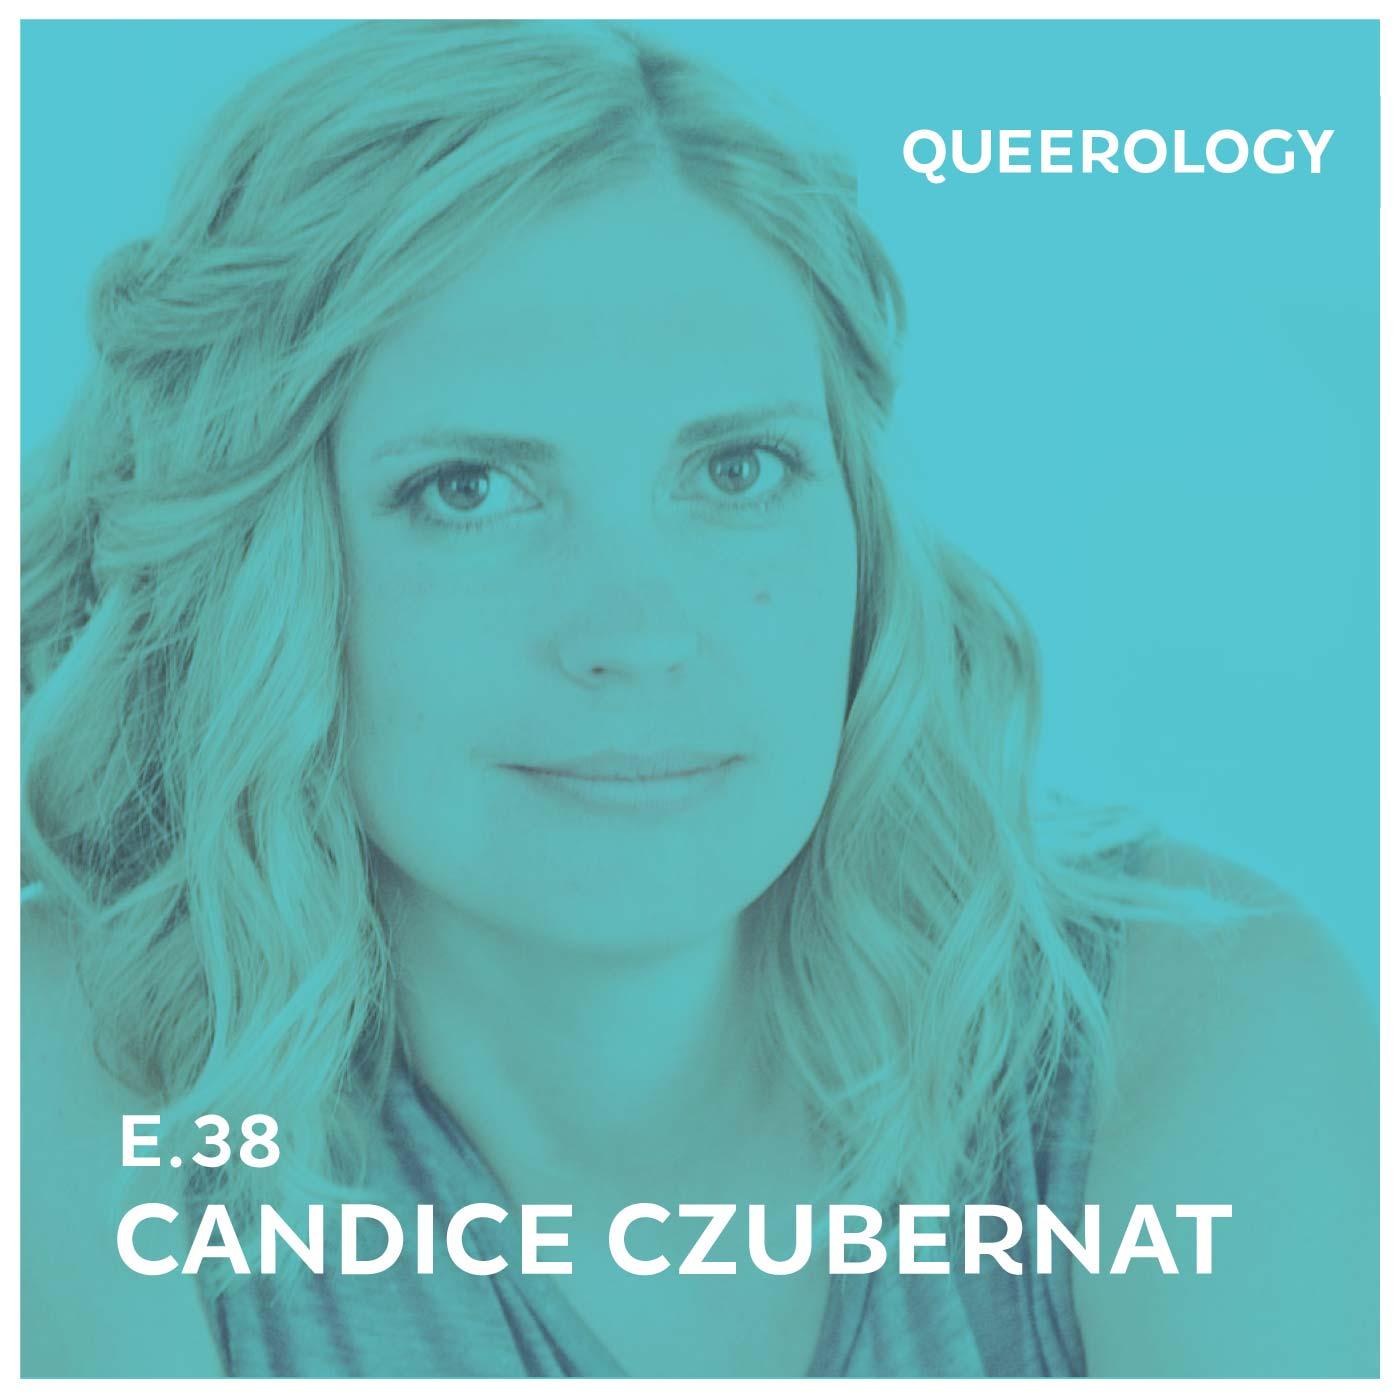 (Encore) Candice Czubernat is a Therapist